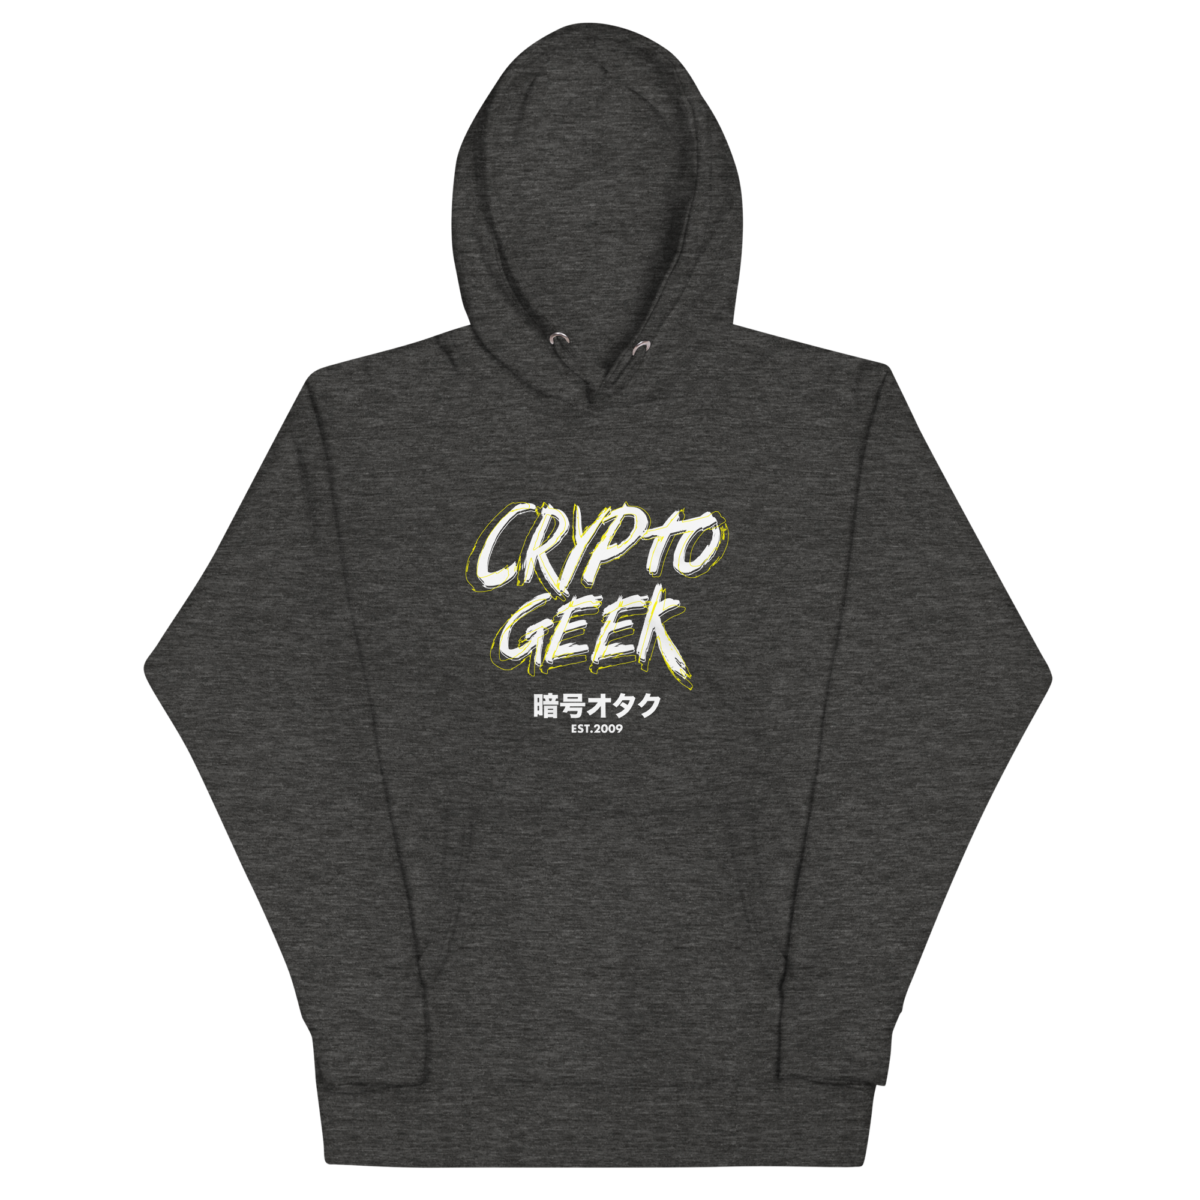 unisex premium hoodie charcoal heather front 635bf23fdd305 - Crypto Geek Hoodie